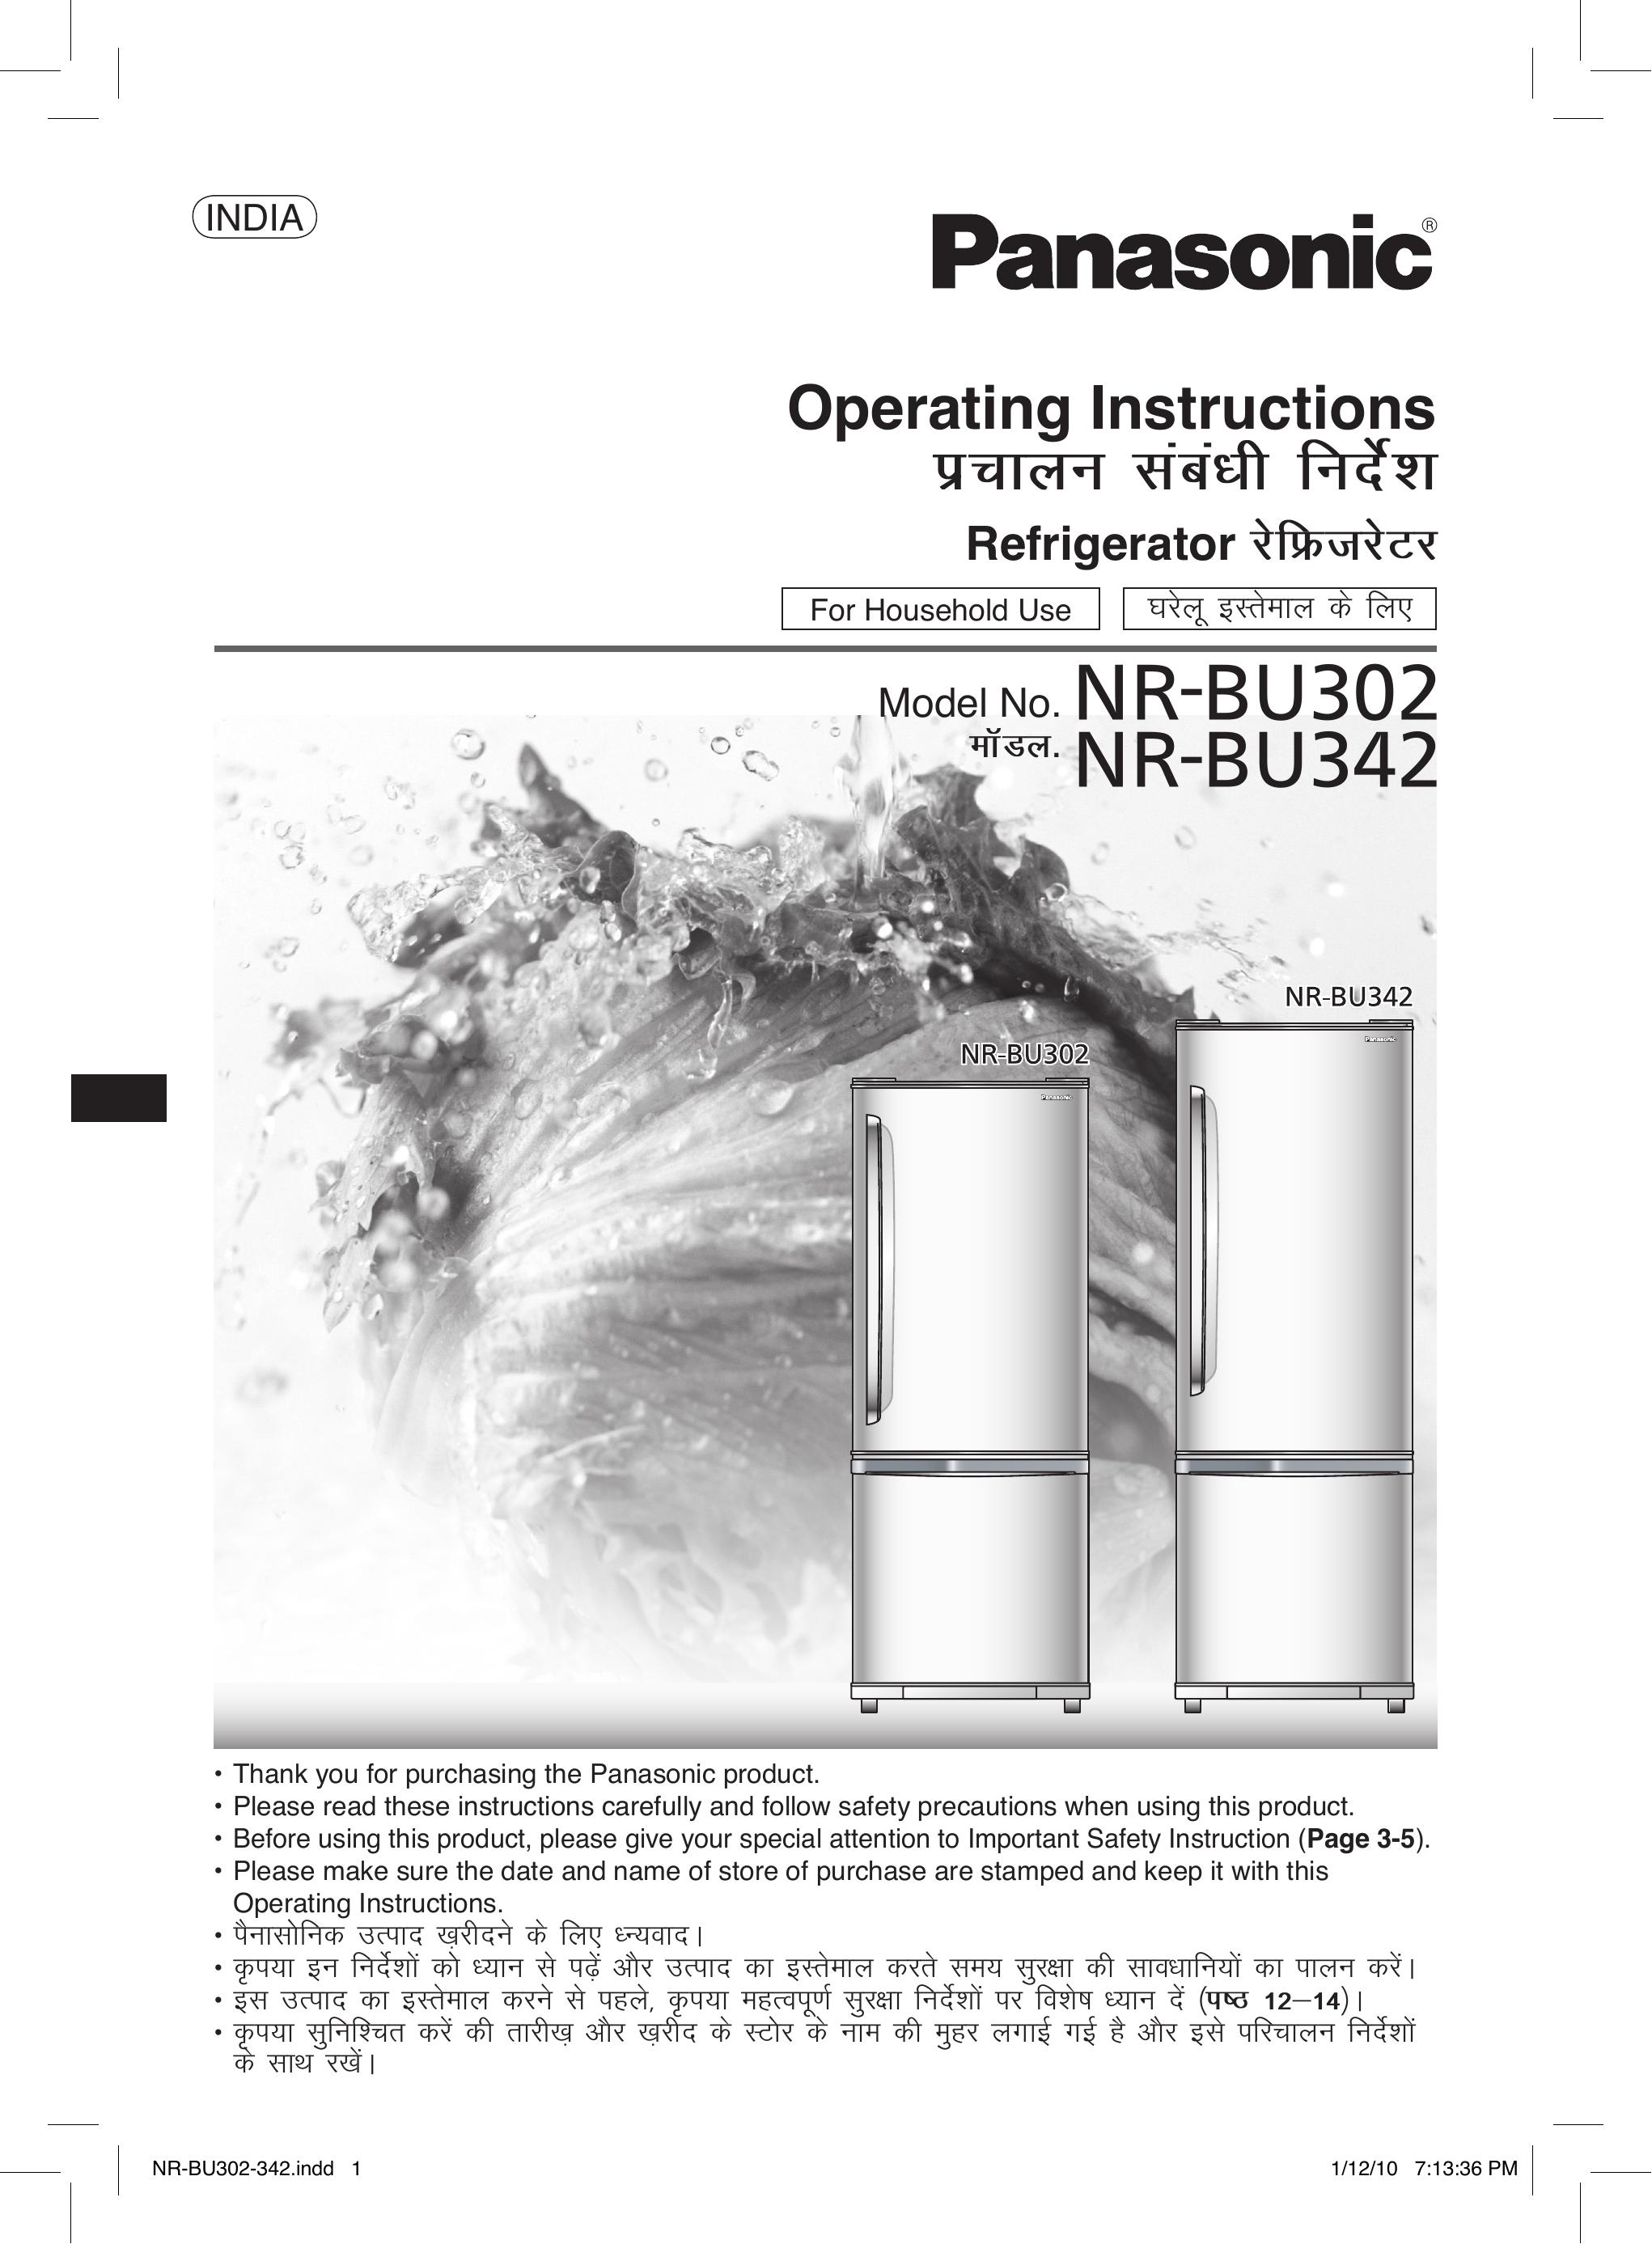 Panasonic NR-BU302 Refrigerator User Manual